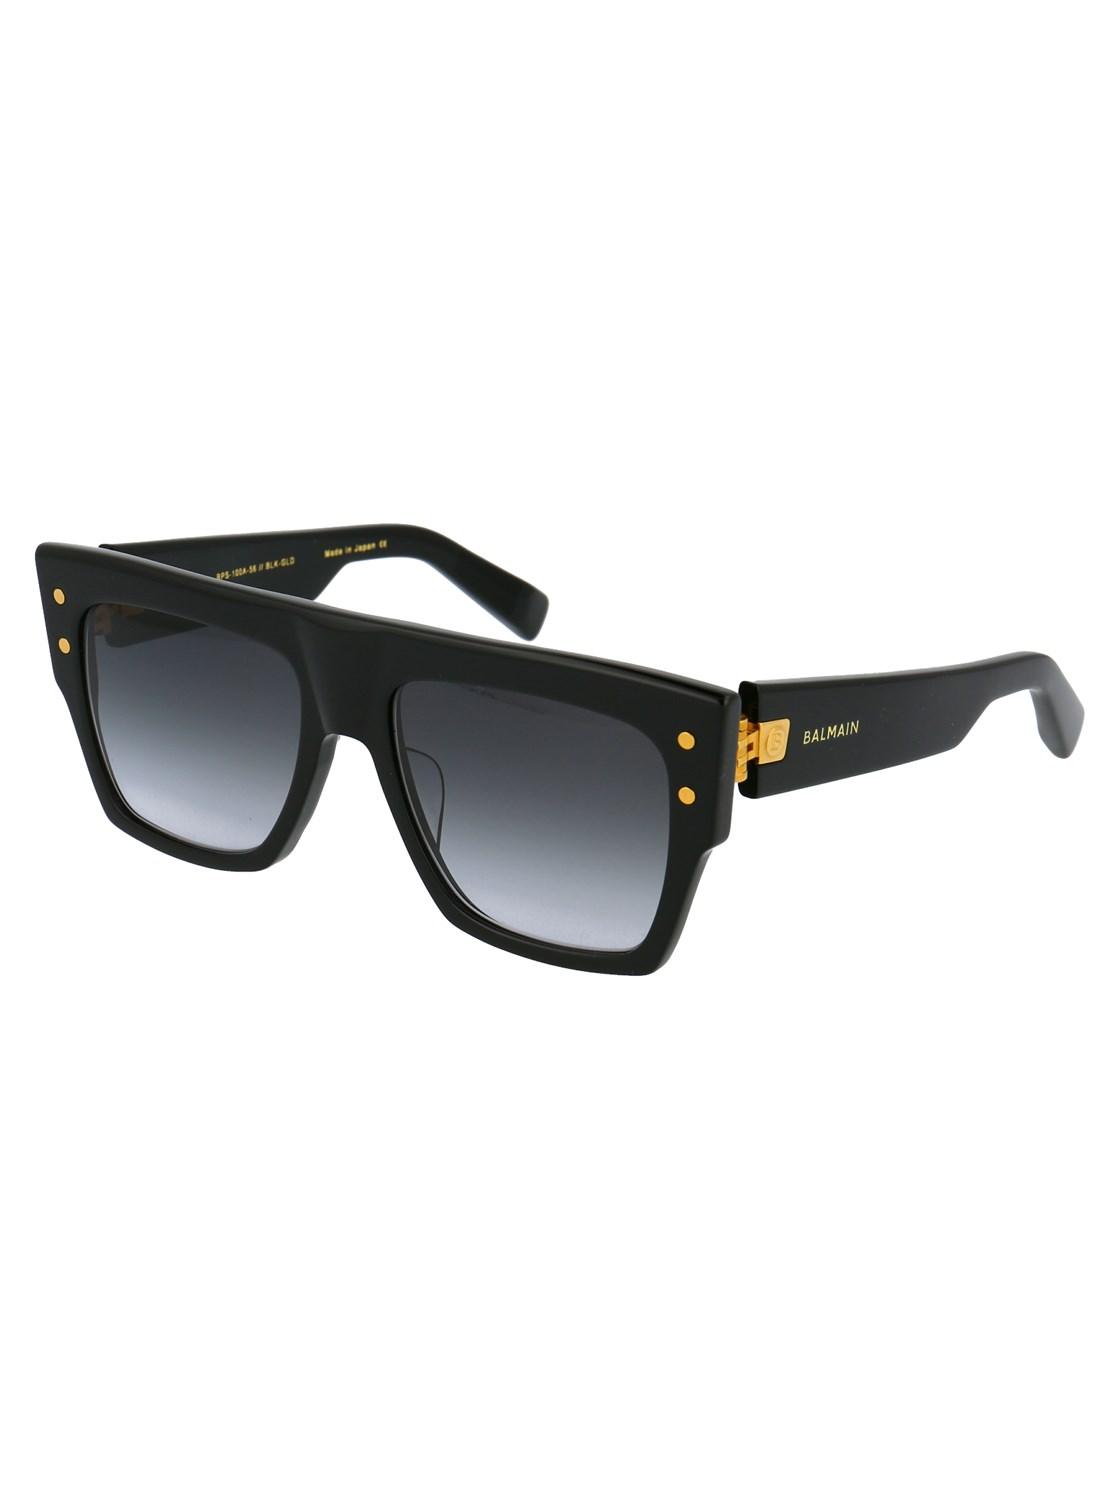 Balmain Black Sunglasses Size 56 for Men - Lyst